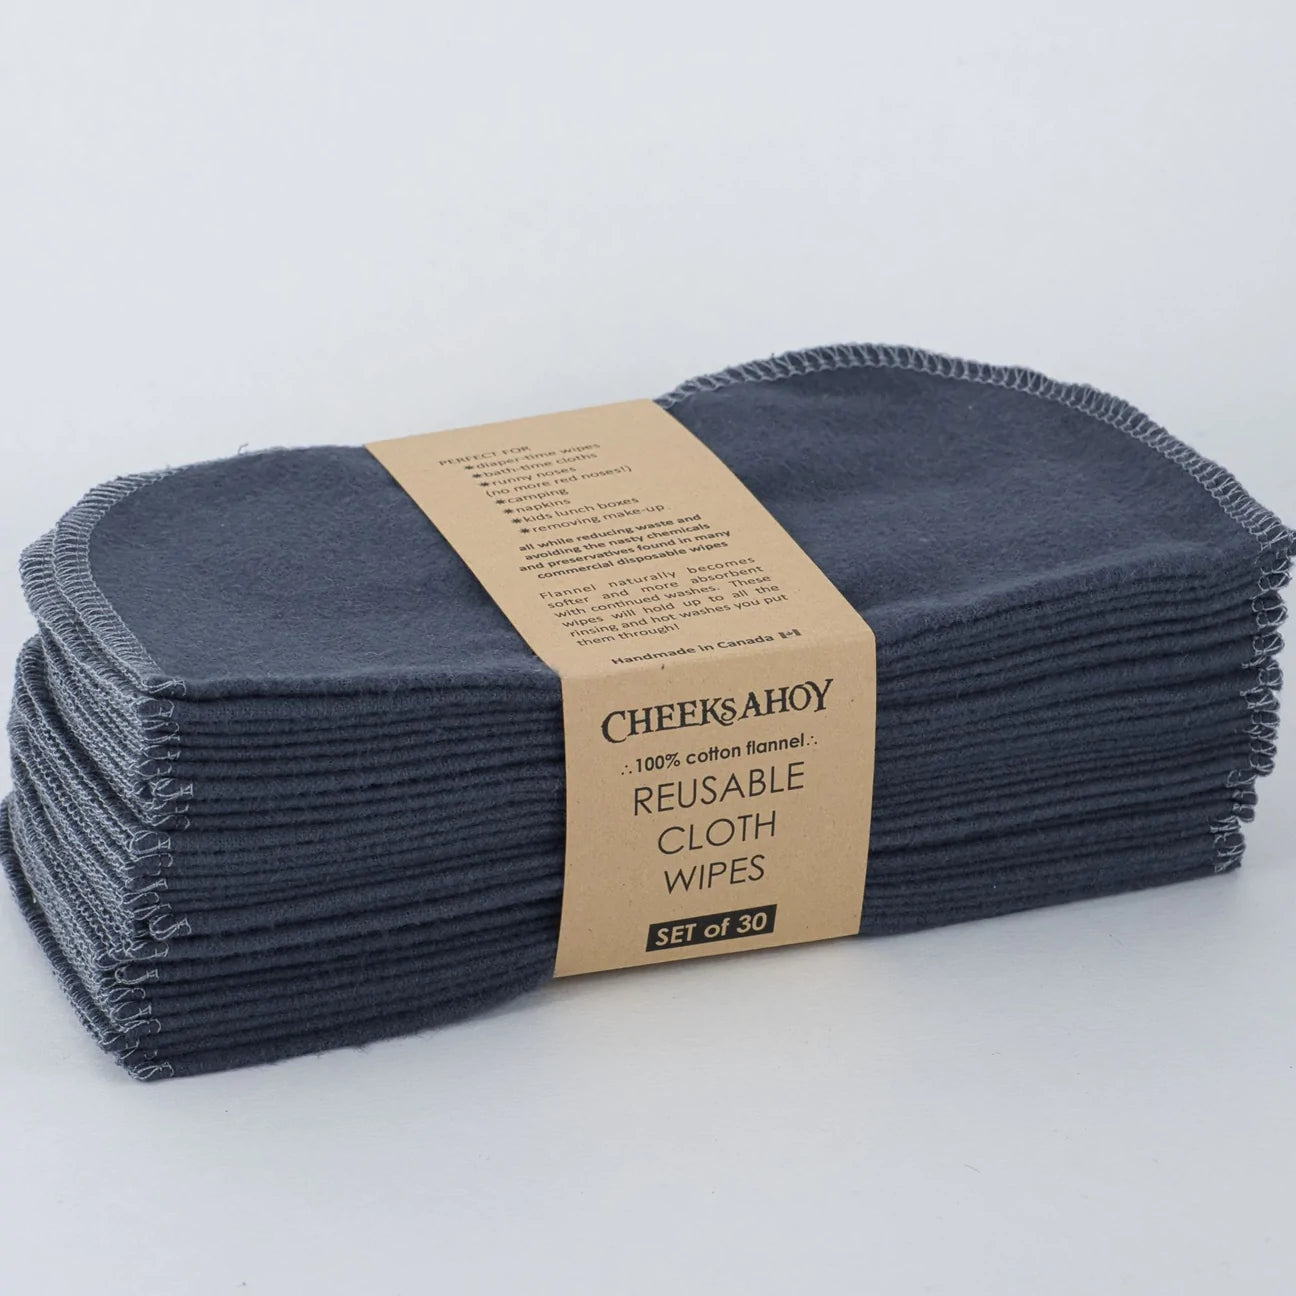 Reusable Cotton Cloth Wipes - Set of 30 | 100% Cotton Flannel